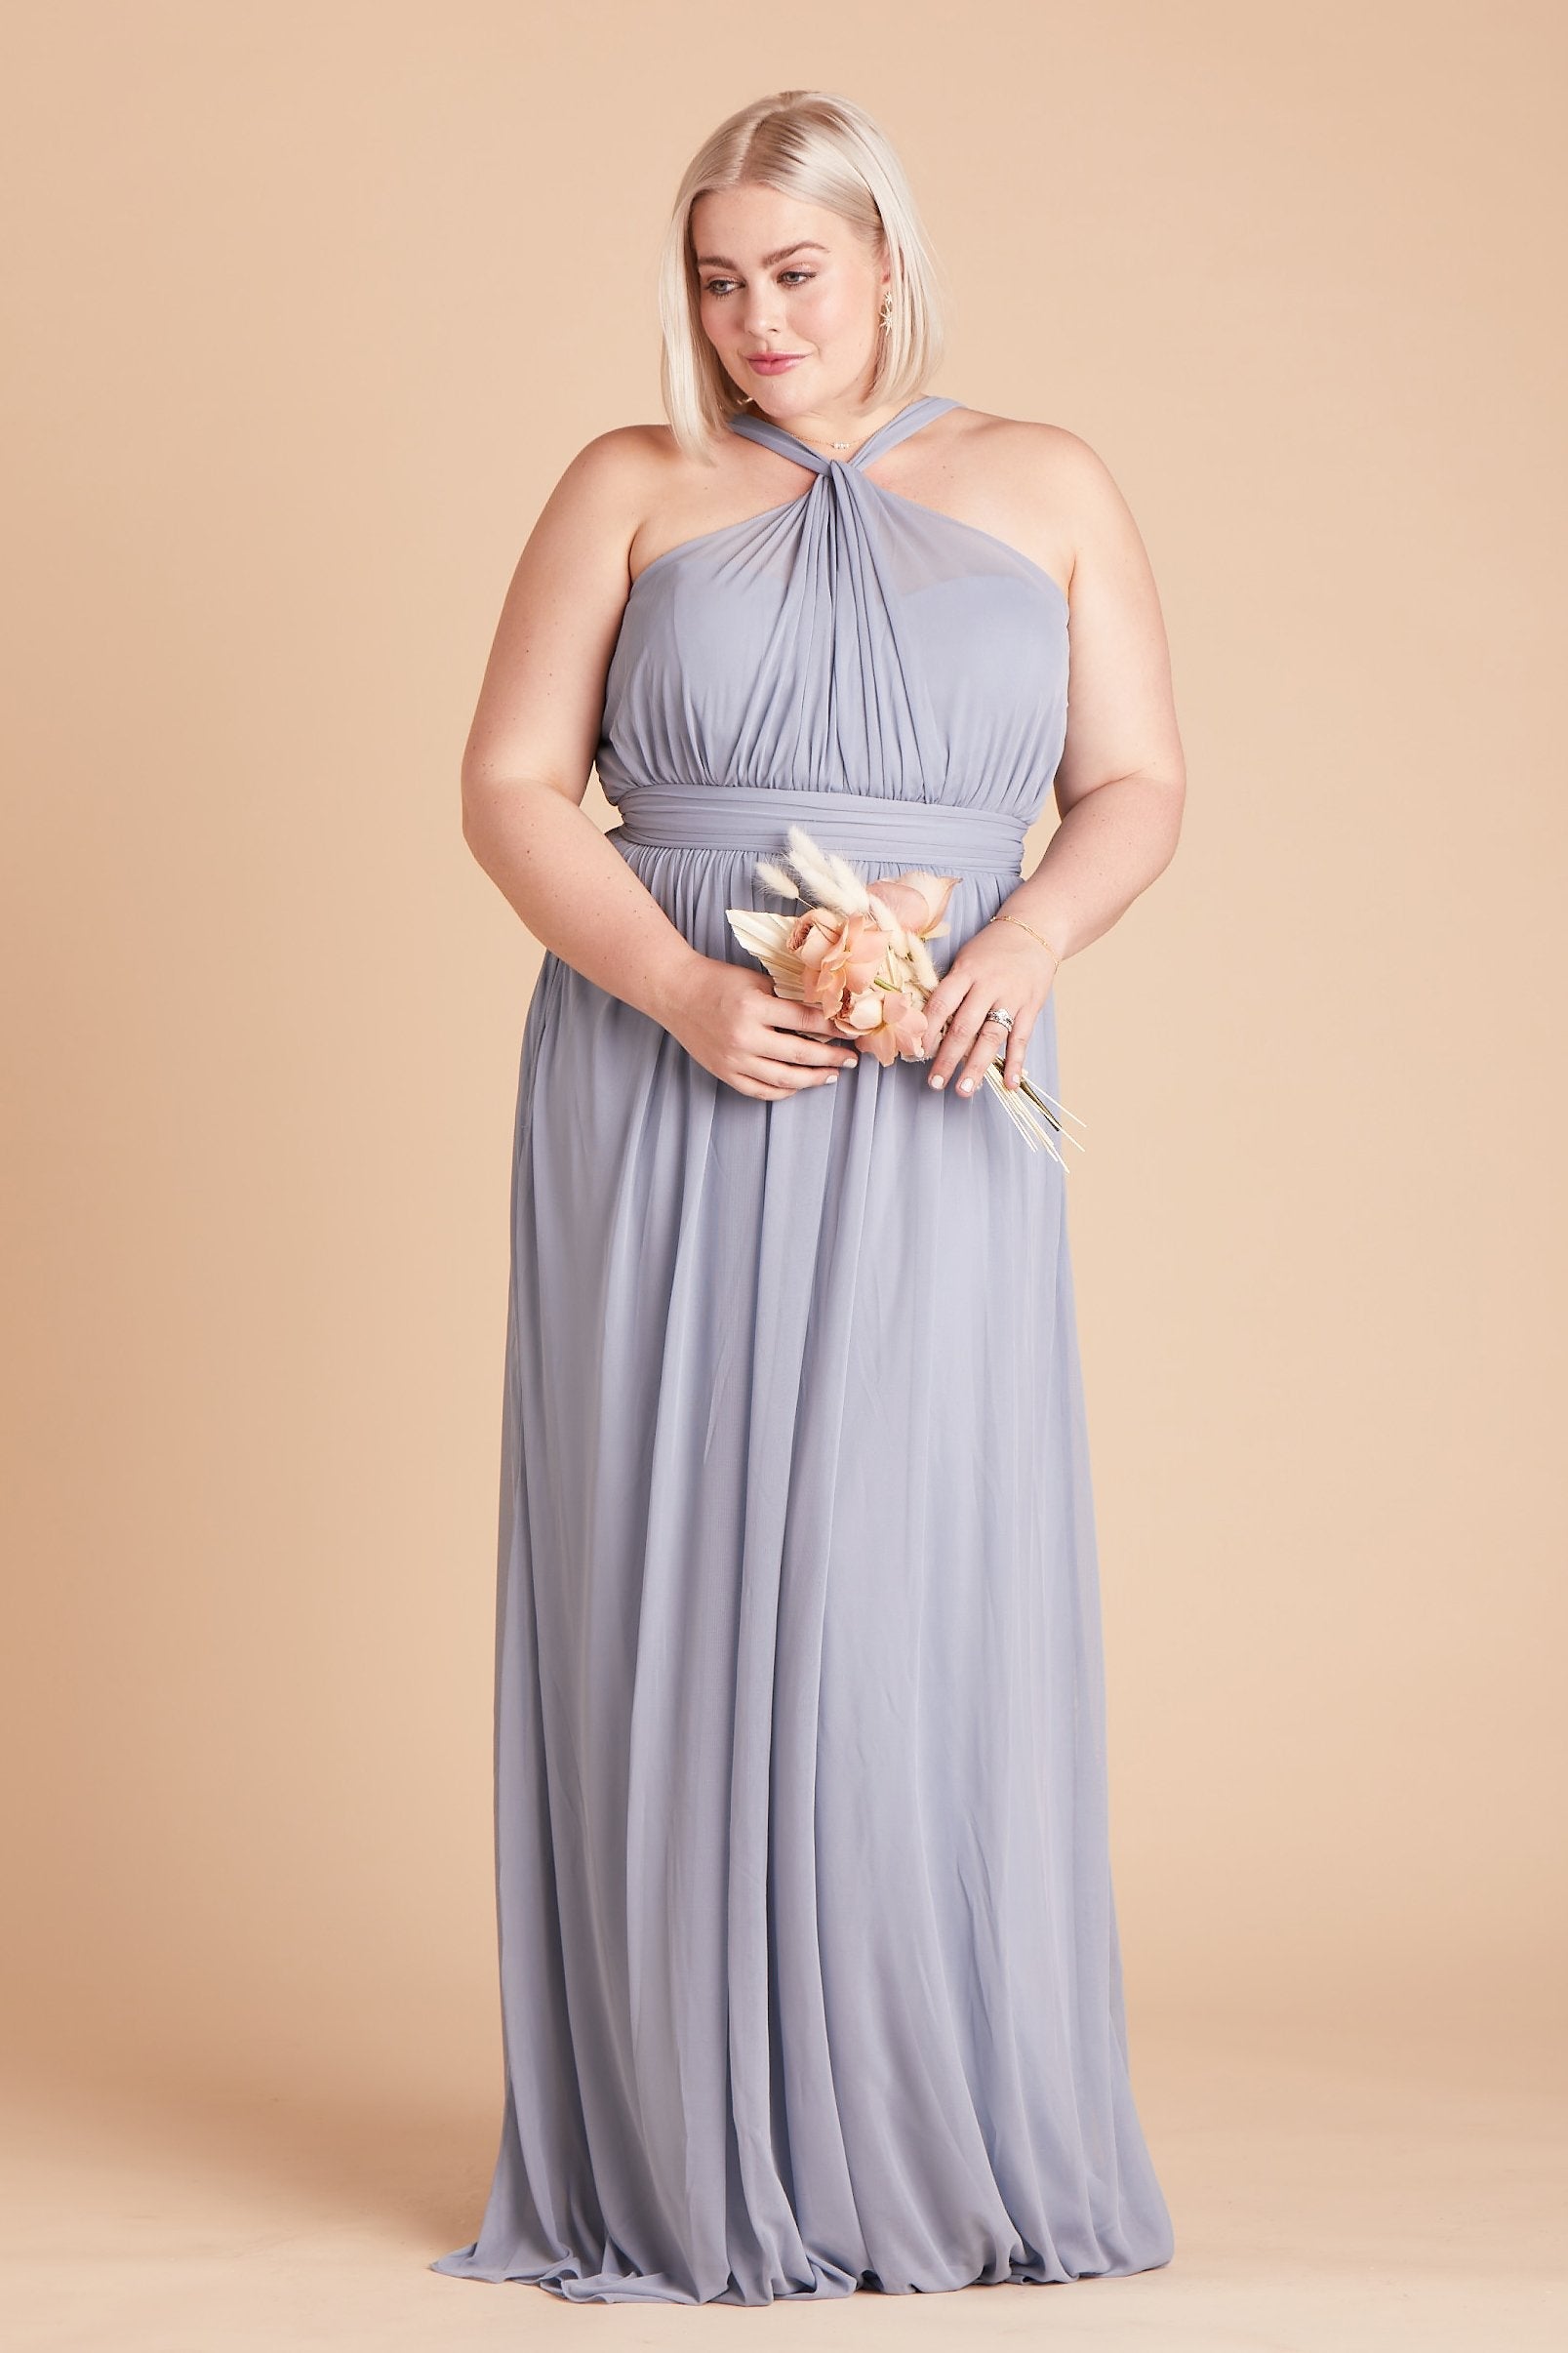 Kiko plus size bridesmaid dress in dusty blue chiffon by Birdy Grey, front view